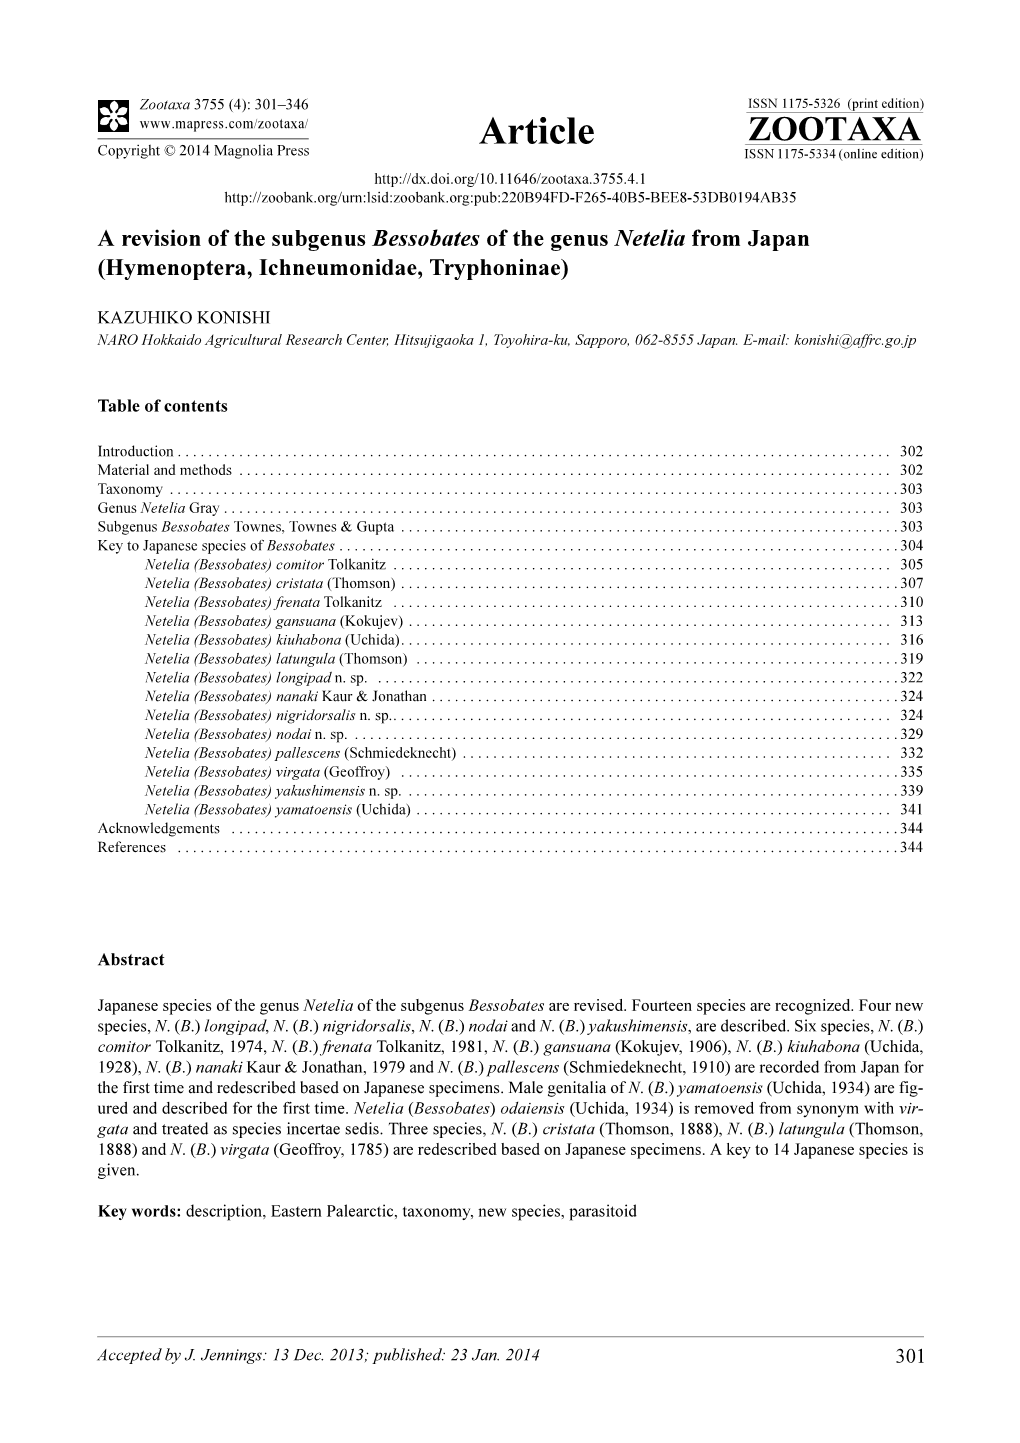 A Revision of the Subgenus Bessobates of the Genus Netelia from Japan (Hymenoptera, Ichneumonidae, Tryphoninae)